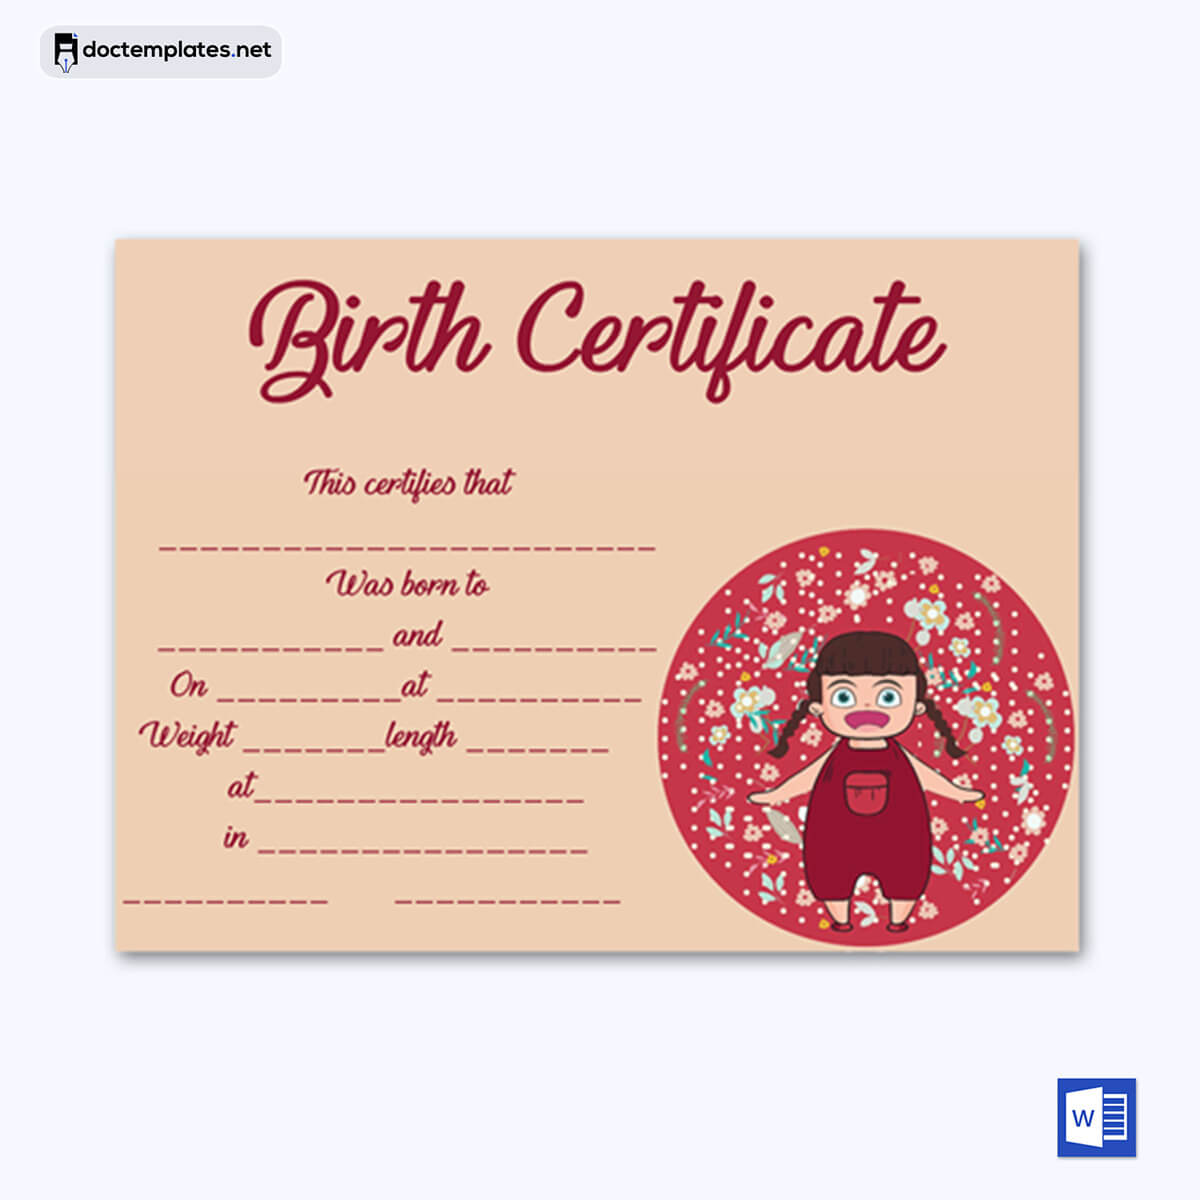 Image of Hospital birth certificate format PDF
Hospital birth certificate format PDF
07